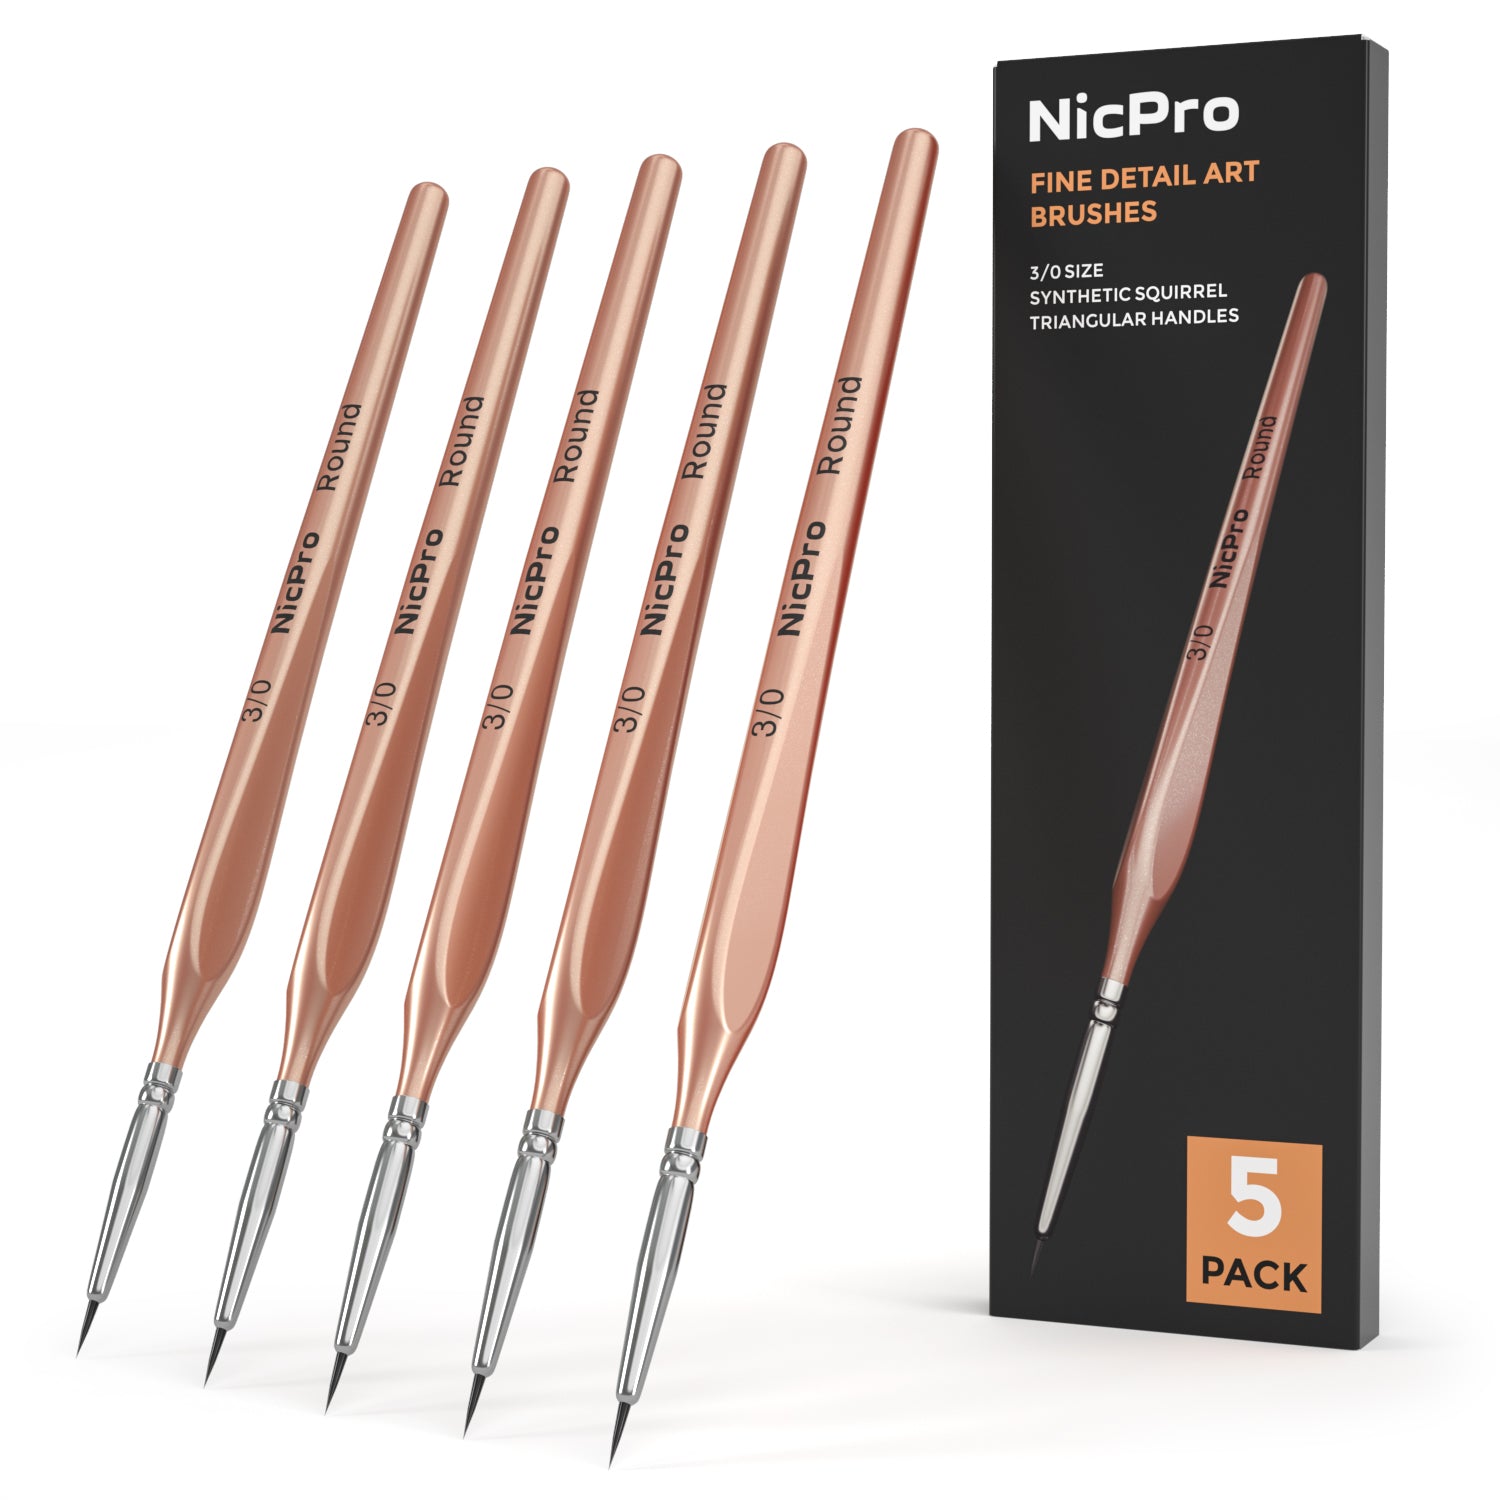 Nicpro New Small Detail Paint Brush Set,16 Professional Miniature Fine